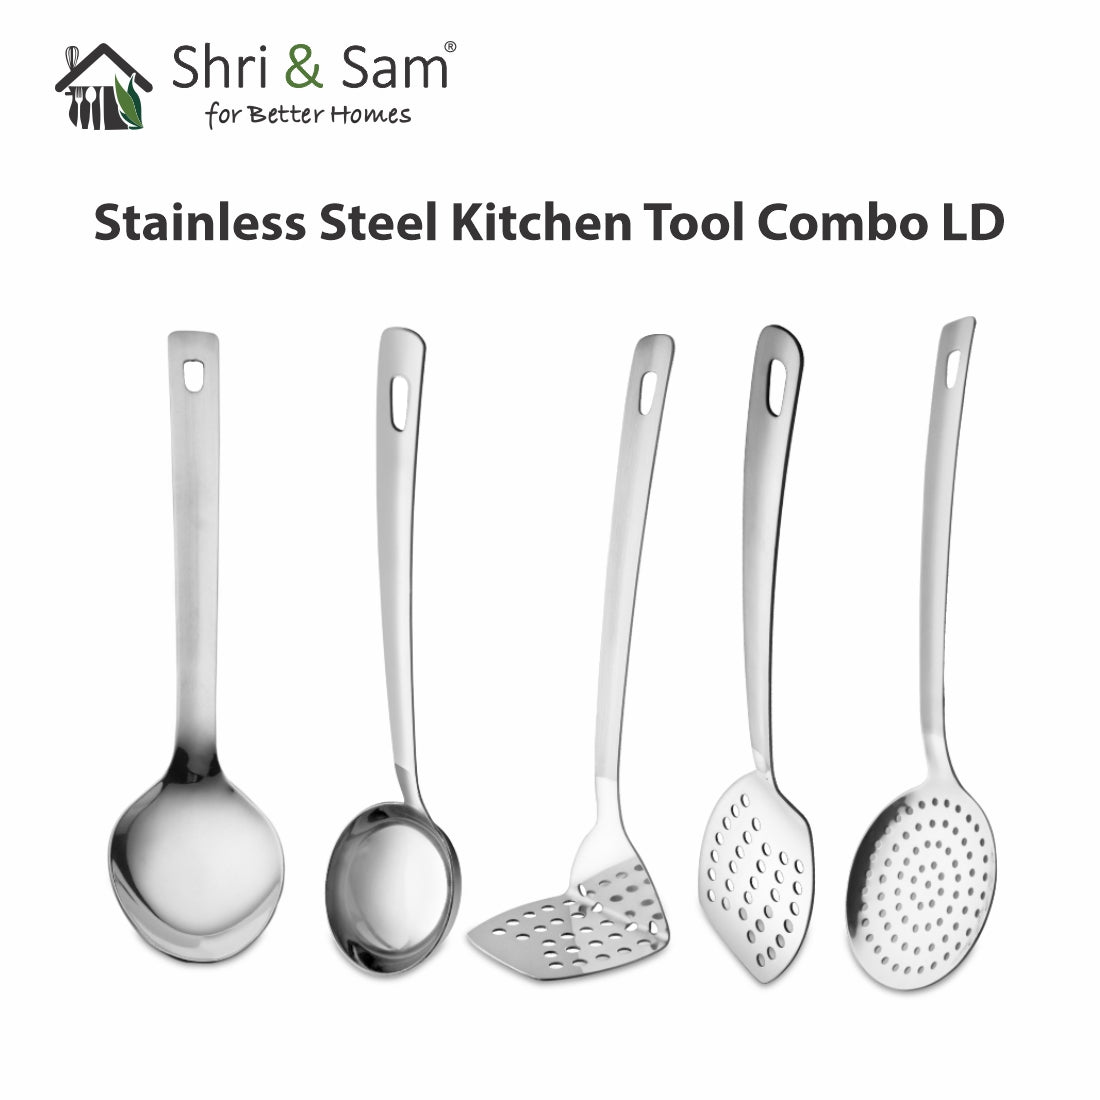 Stainless Steel Kitchen Tool Combo LD